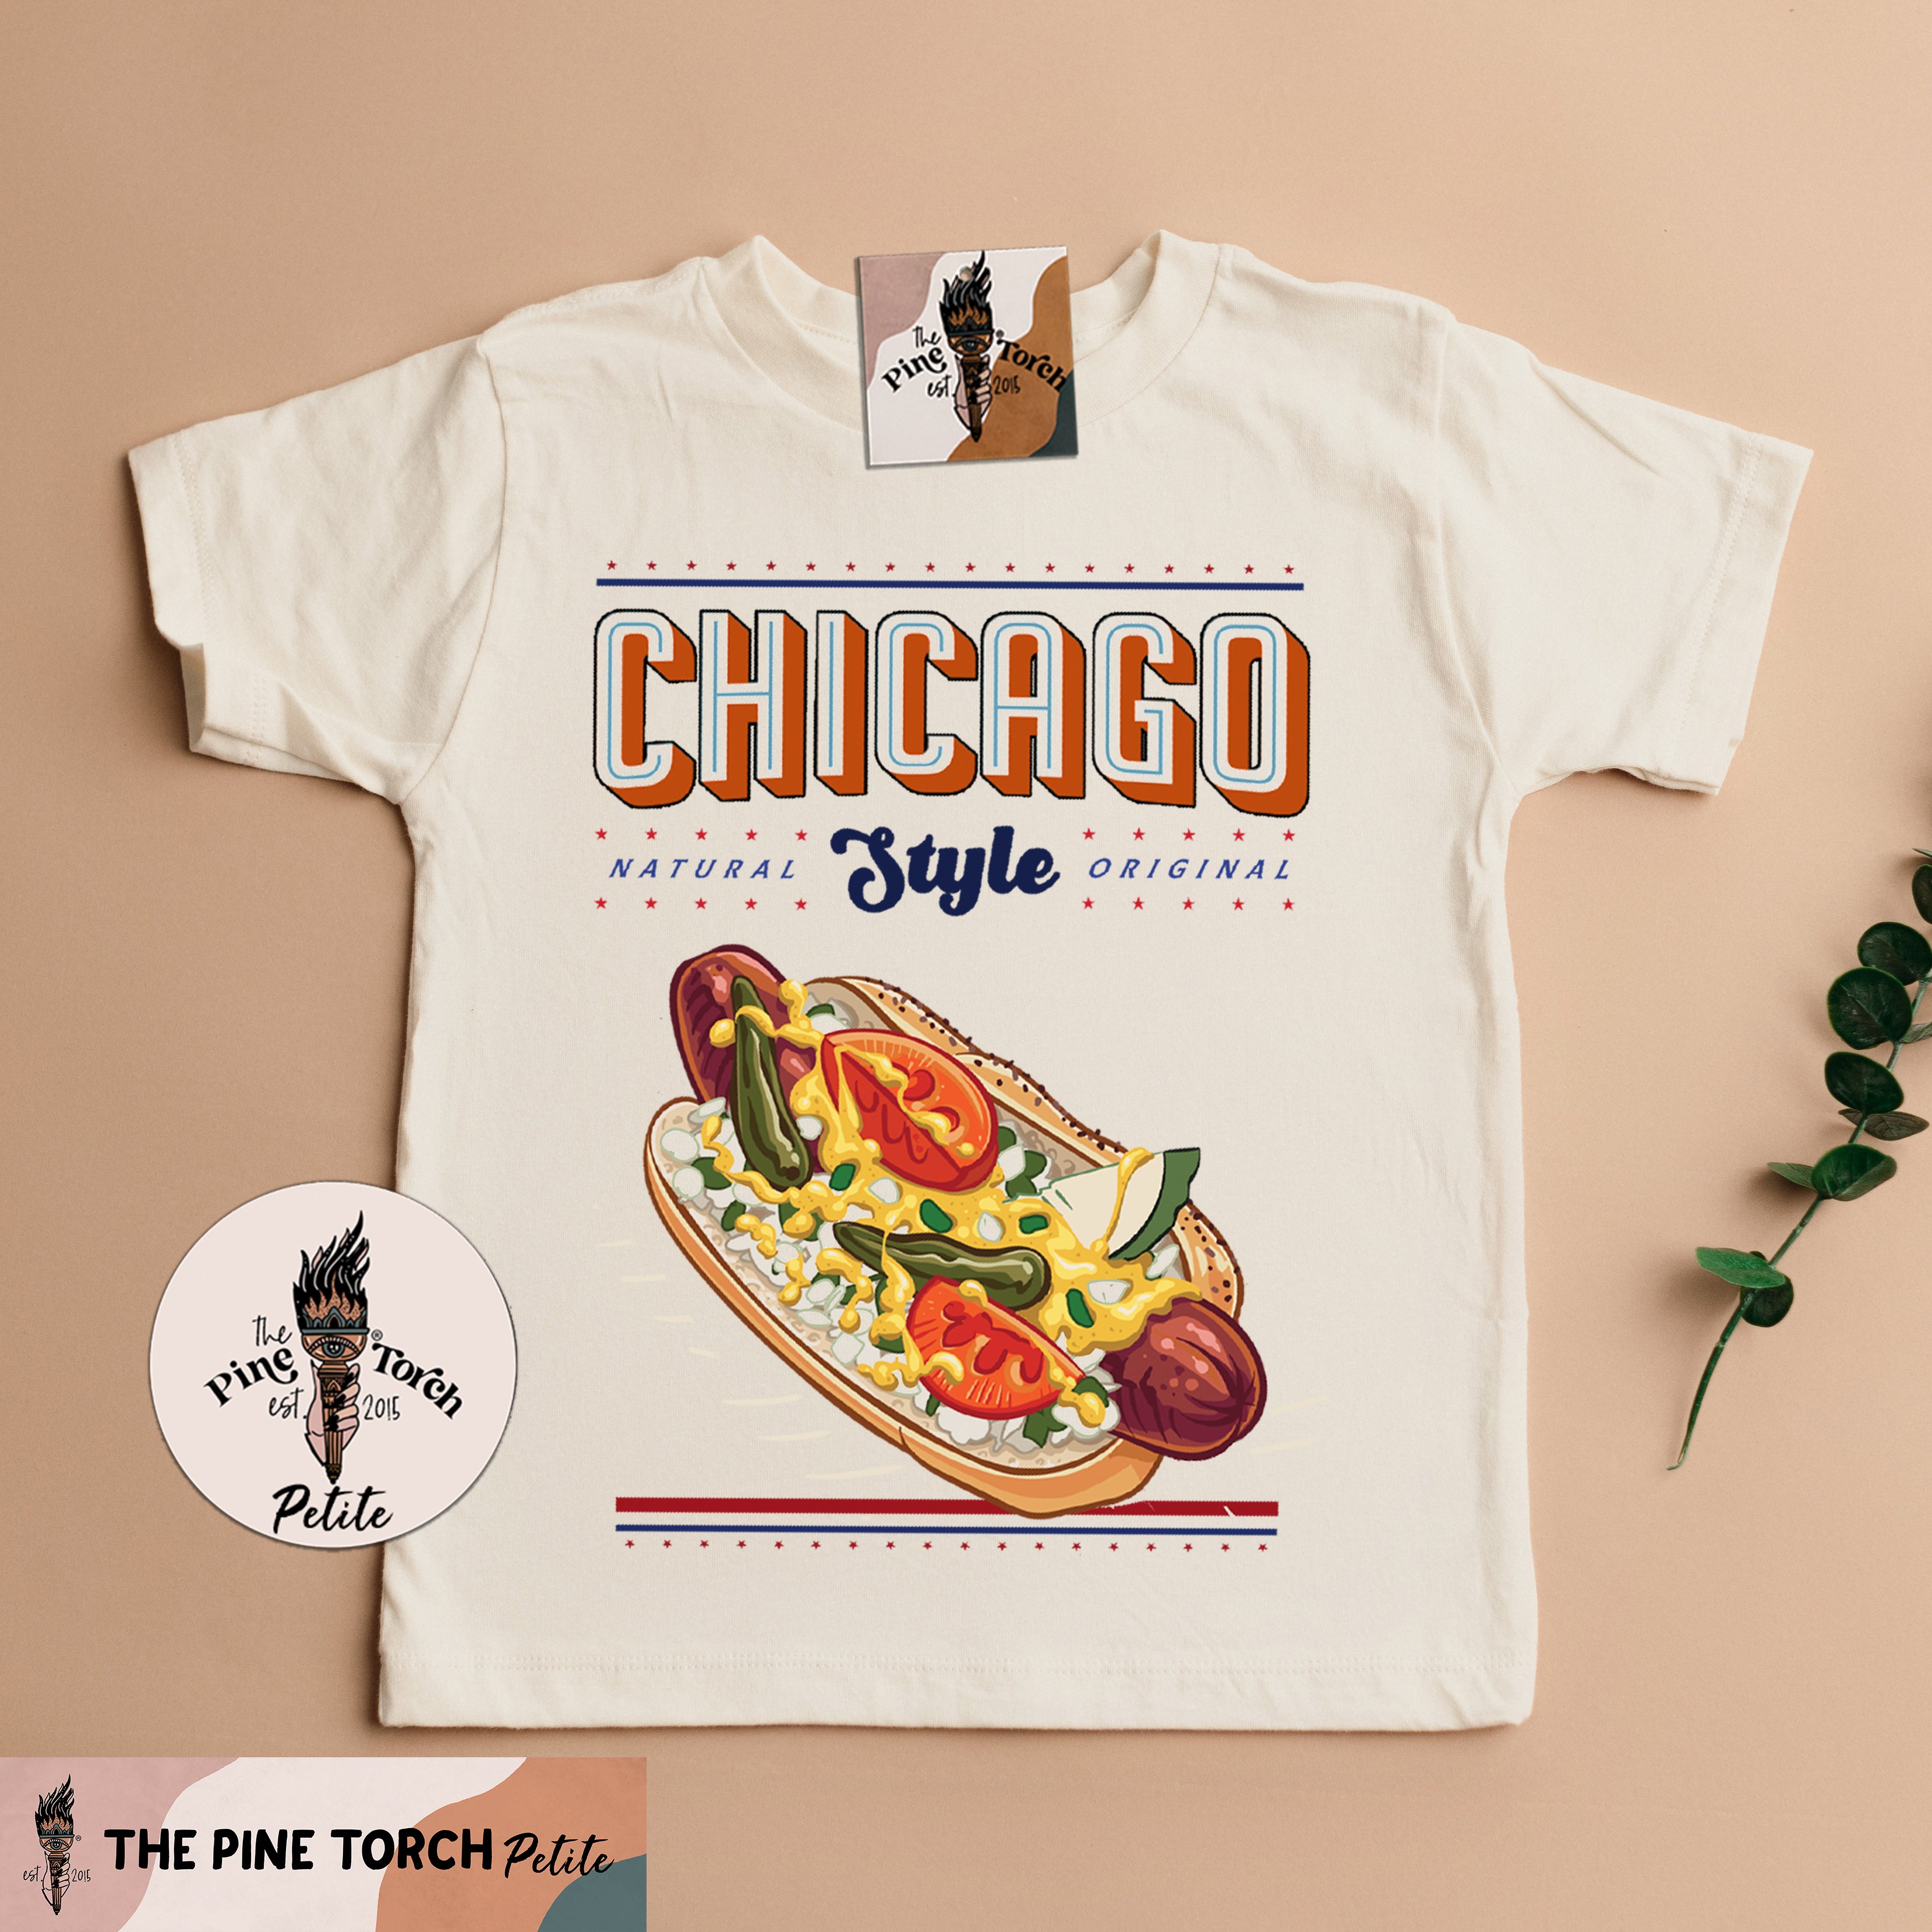 « CHICAGO STYLE HOT DOG » BODYSUIT